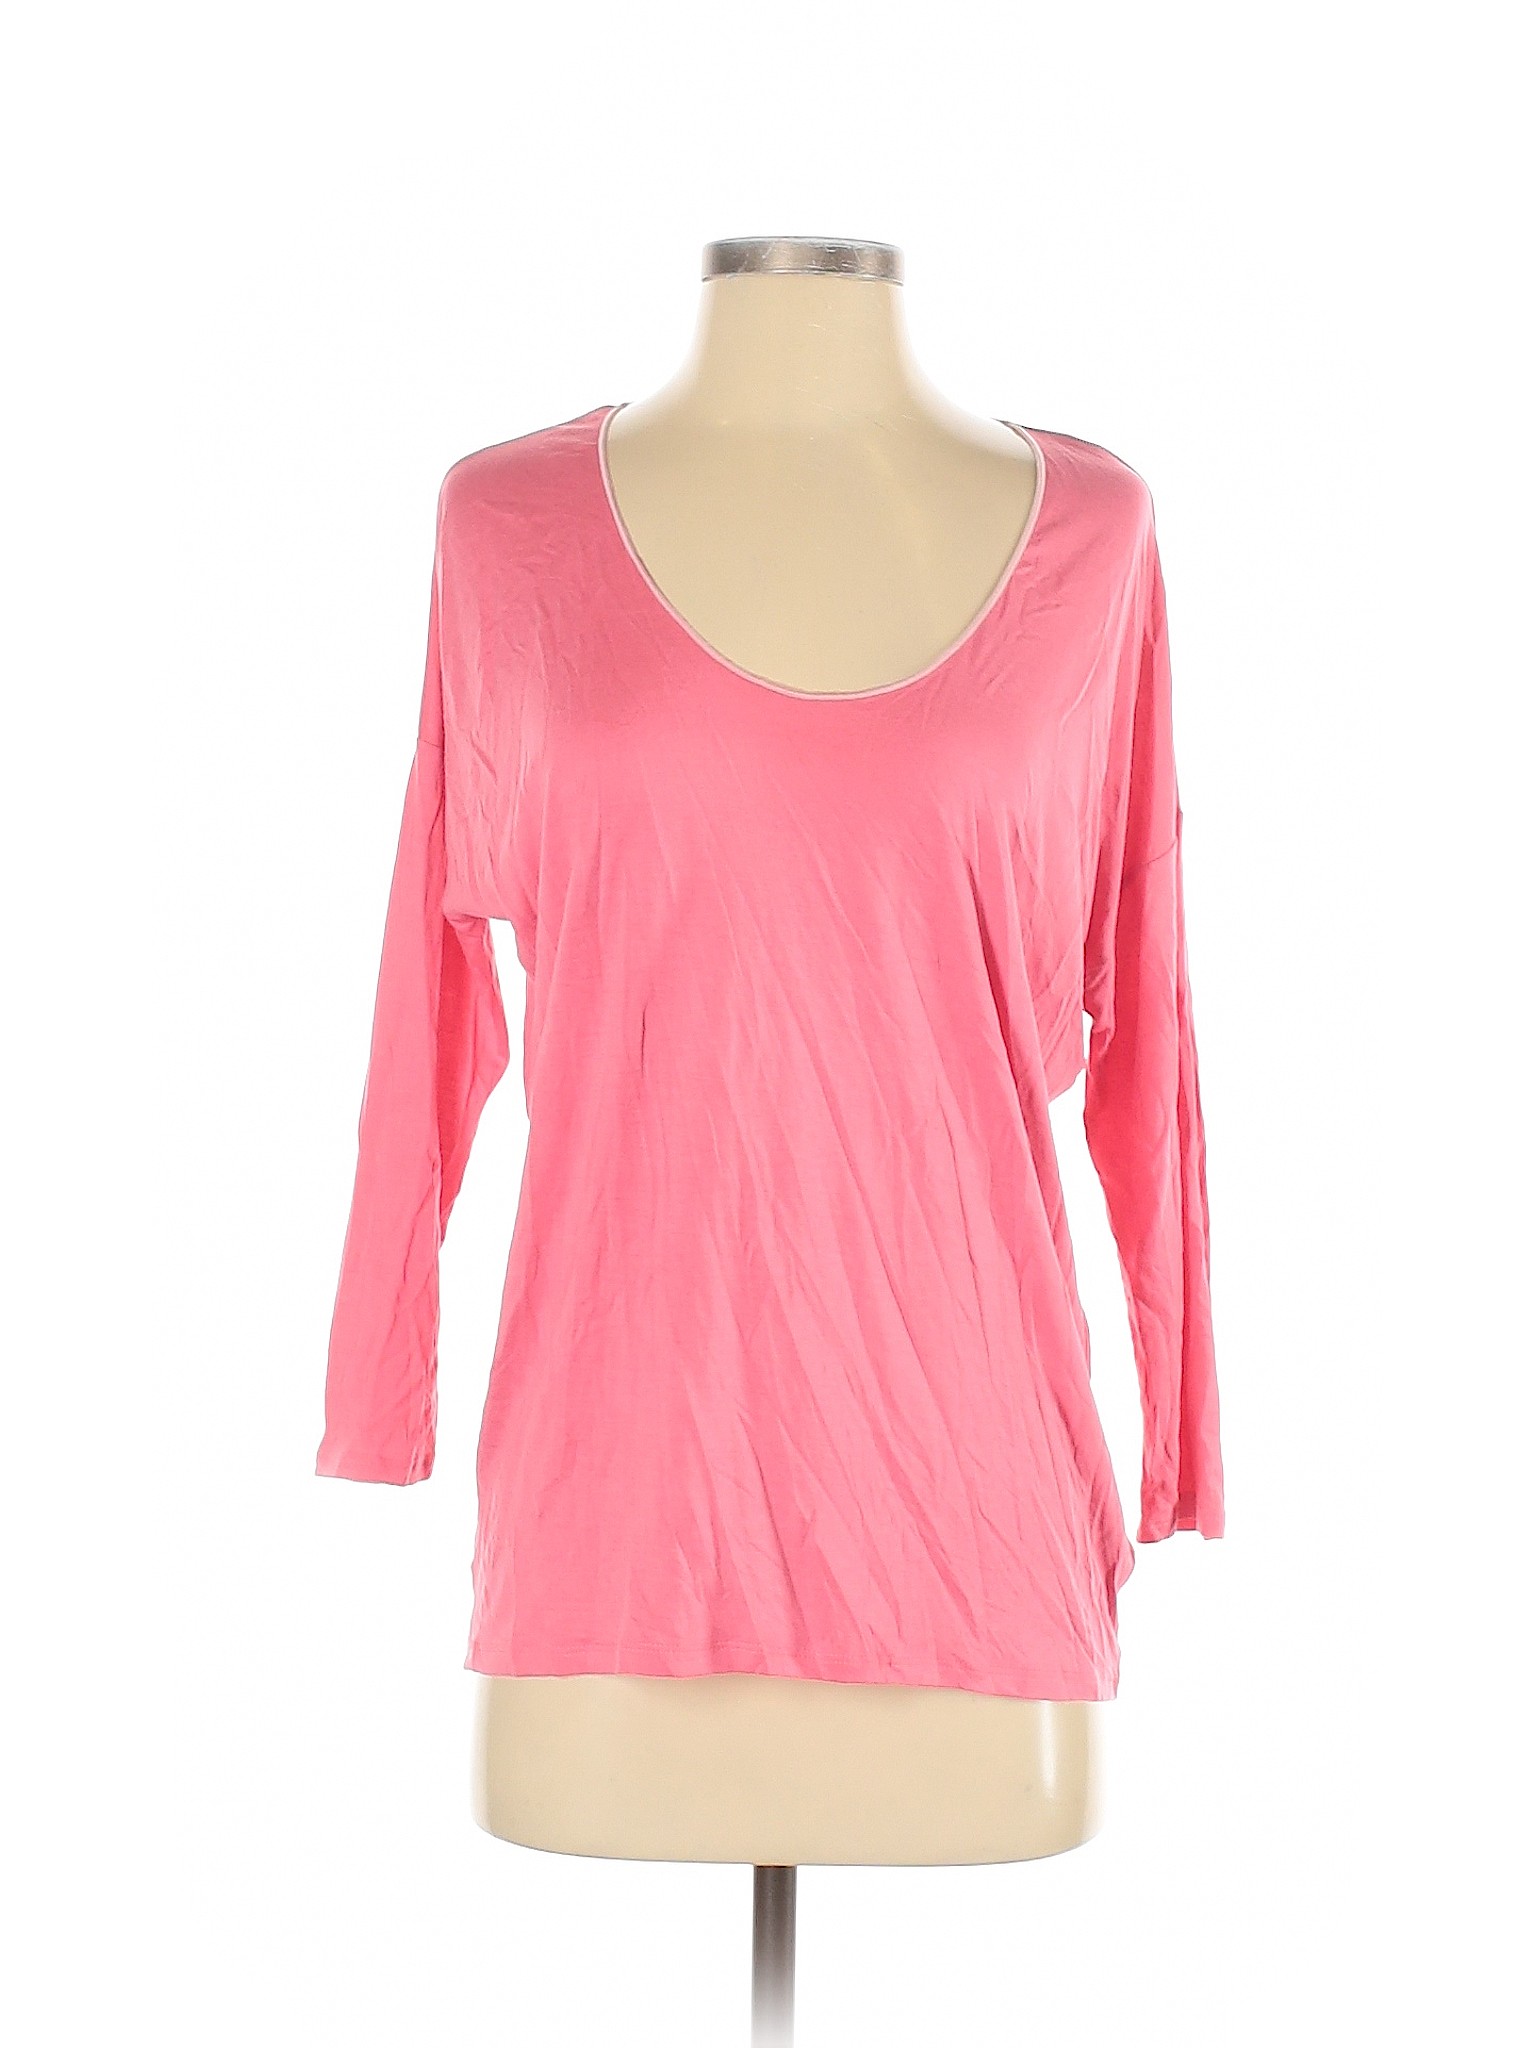 Gap Women Pink 3/4 Sleeve T-Shirt S | eBay